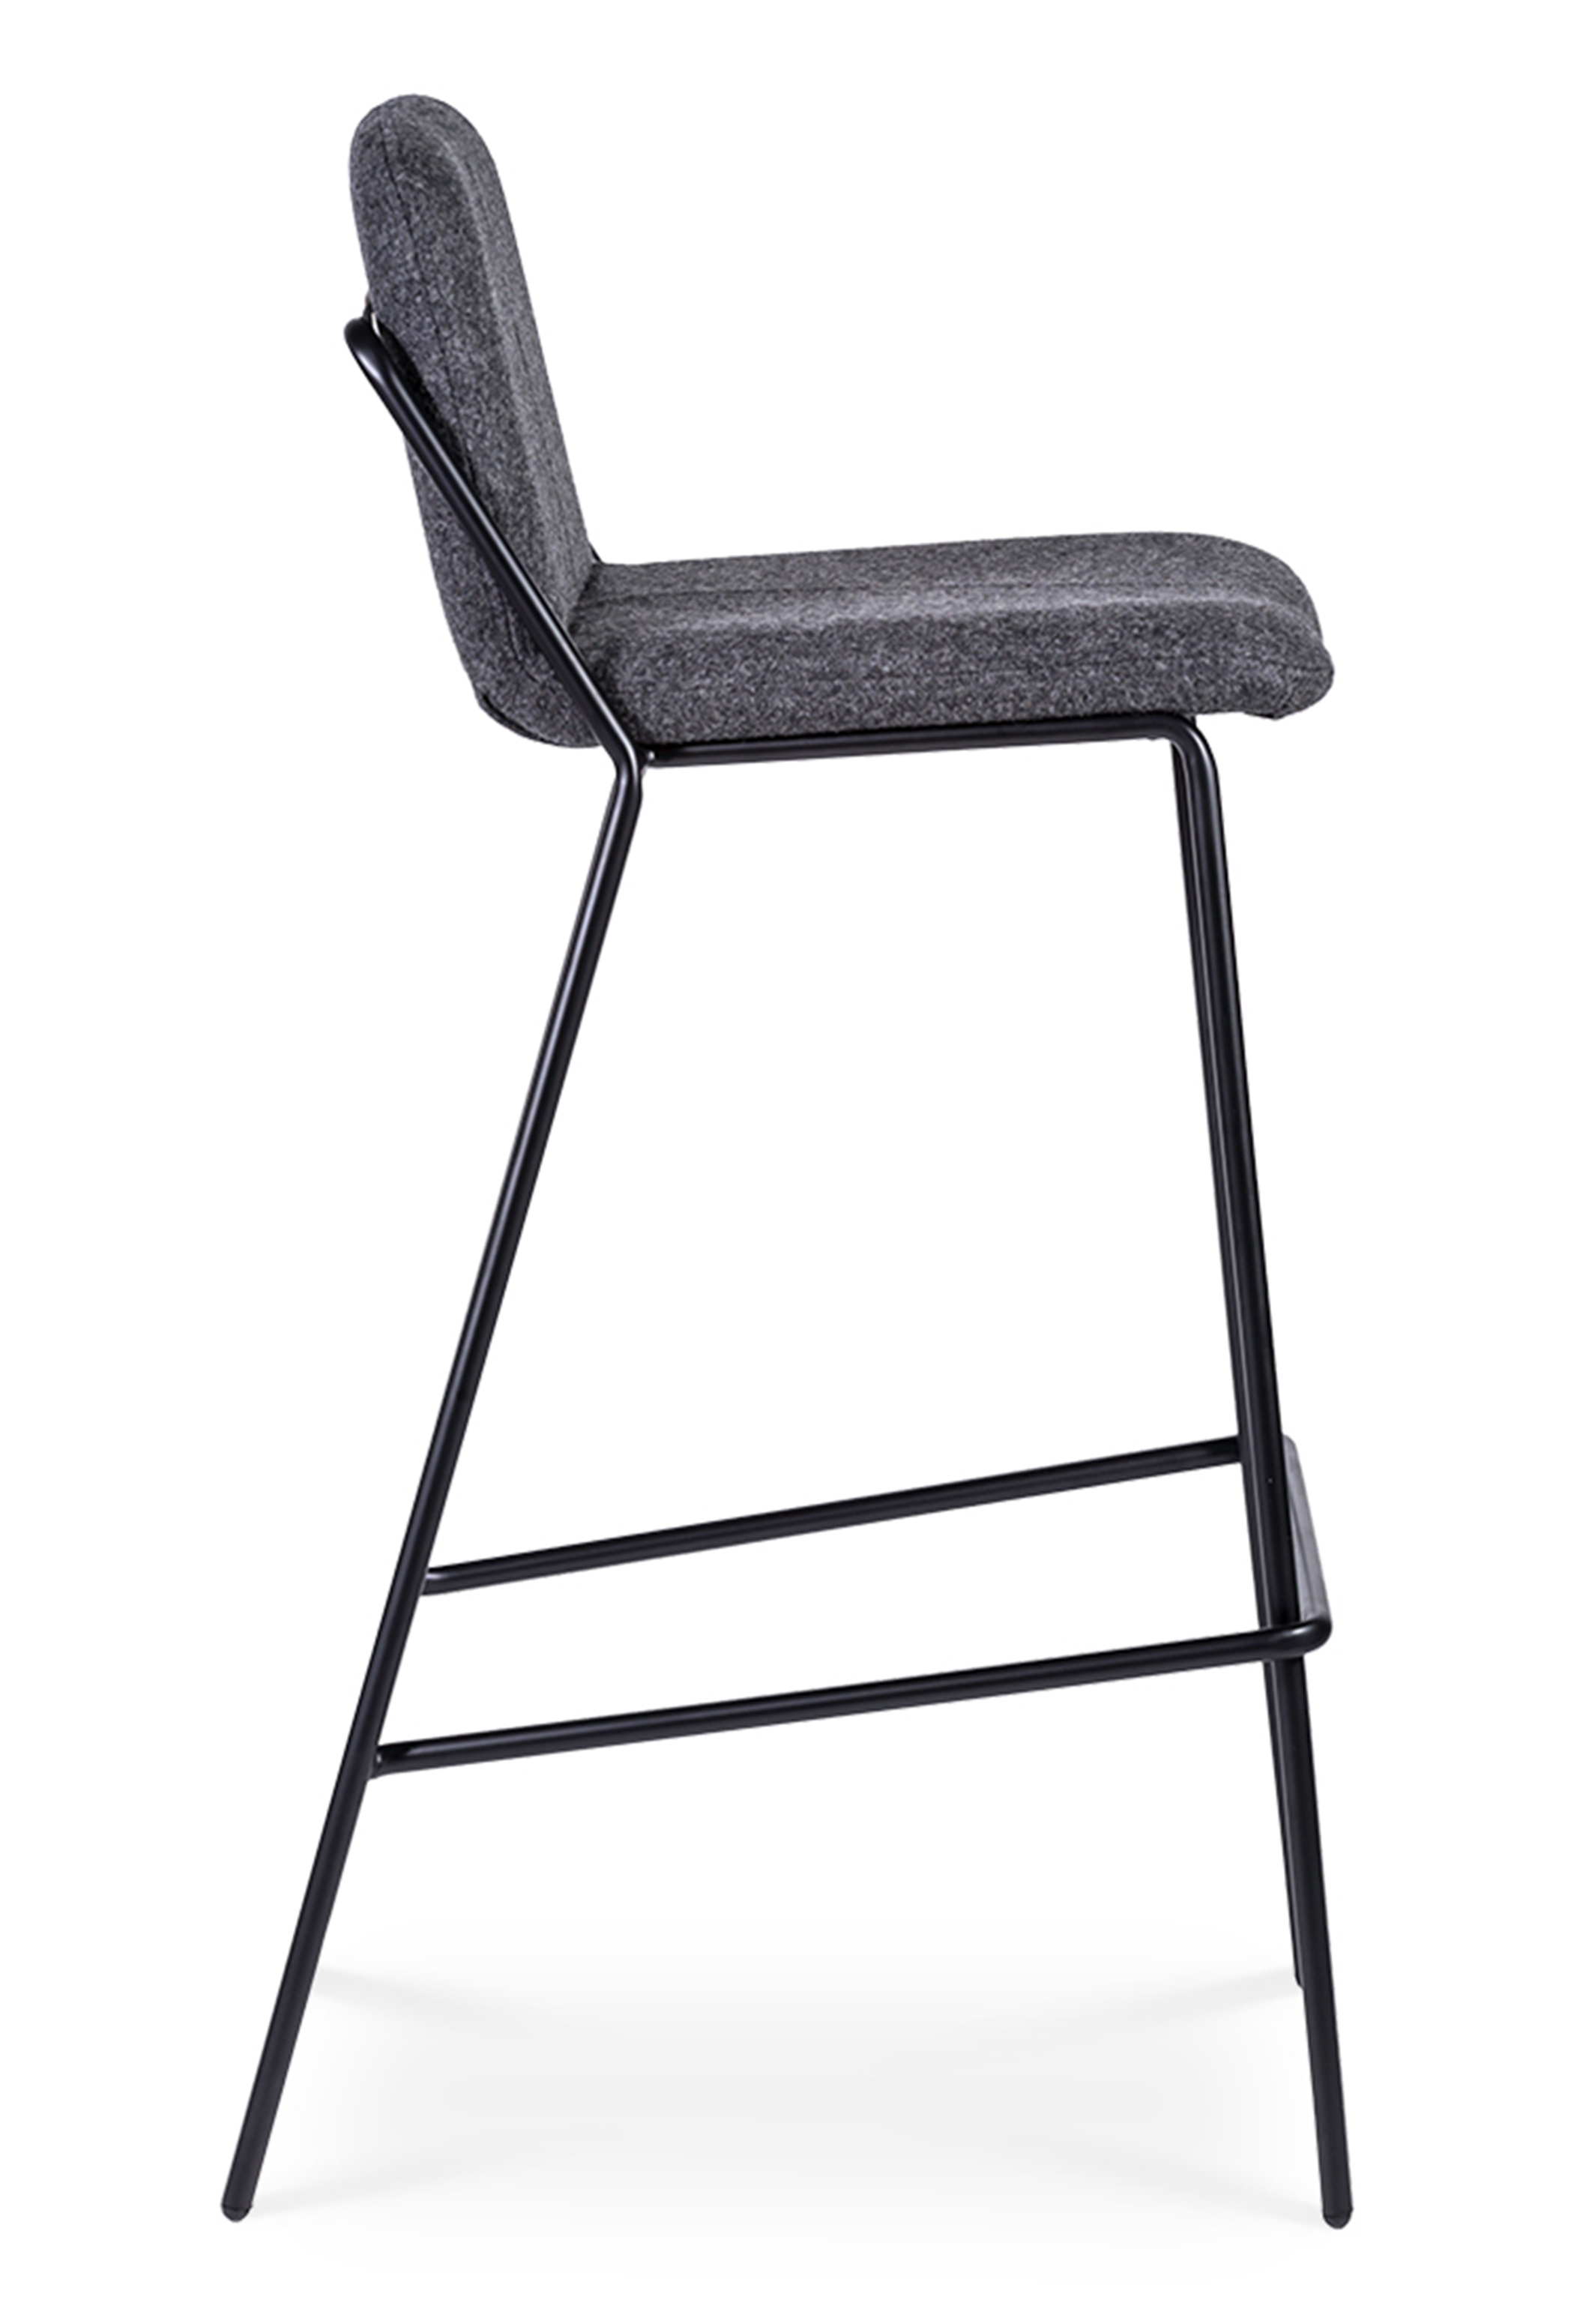 WS - Sling high stool - Upholstered dark grey (Side)